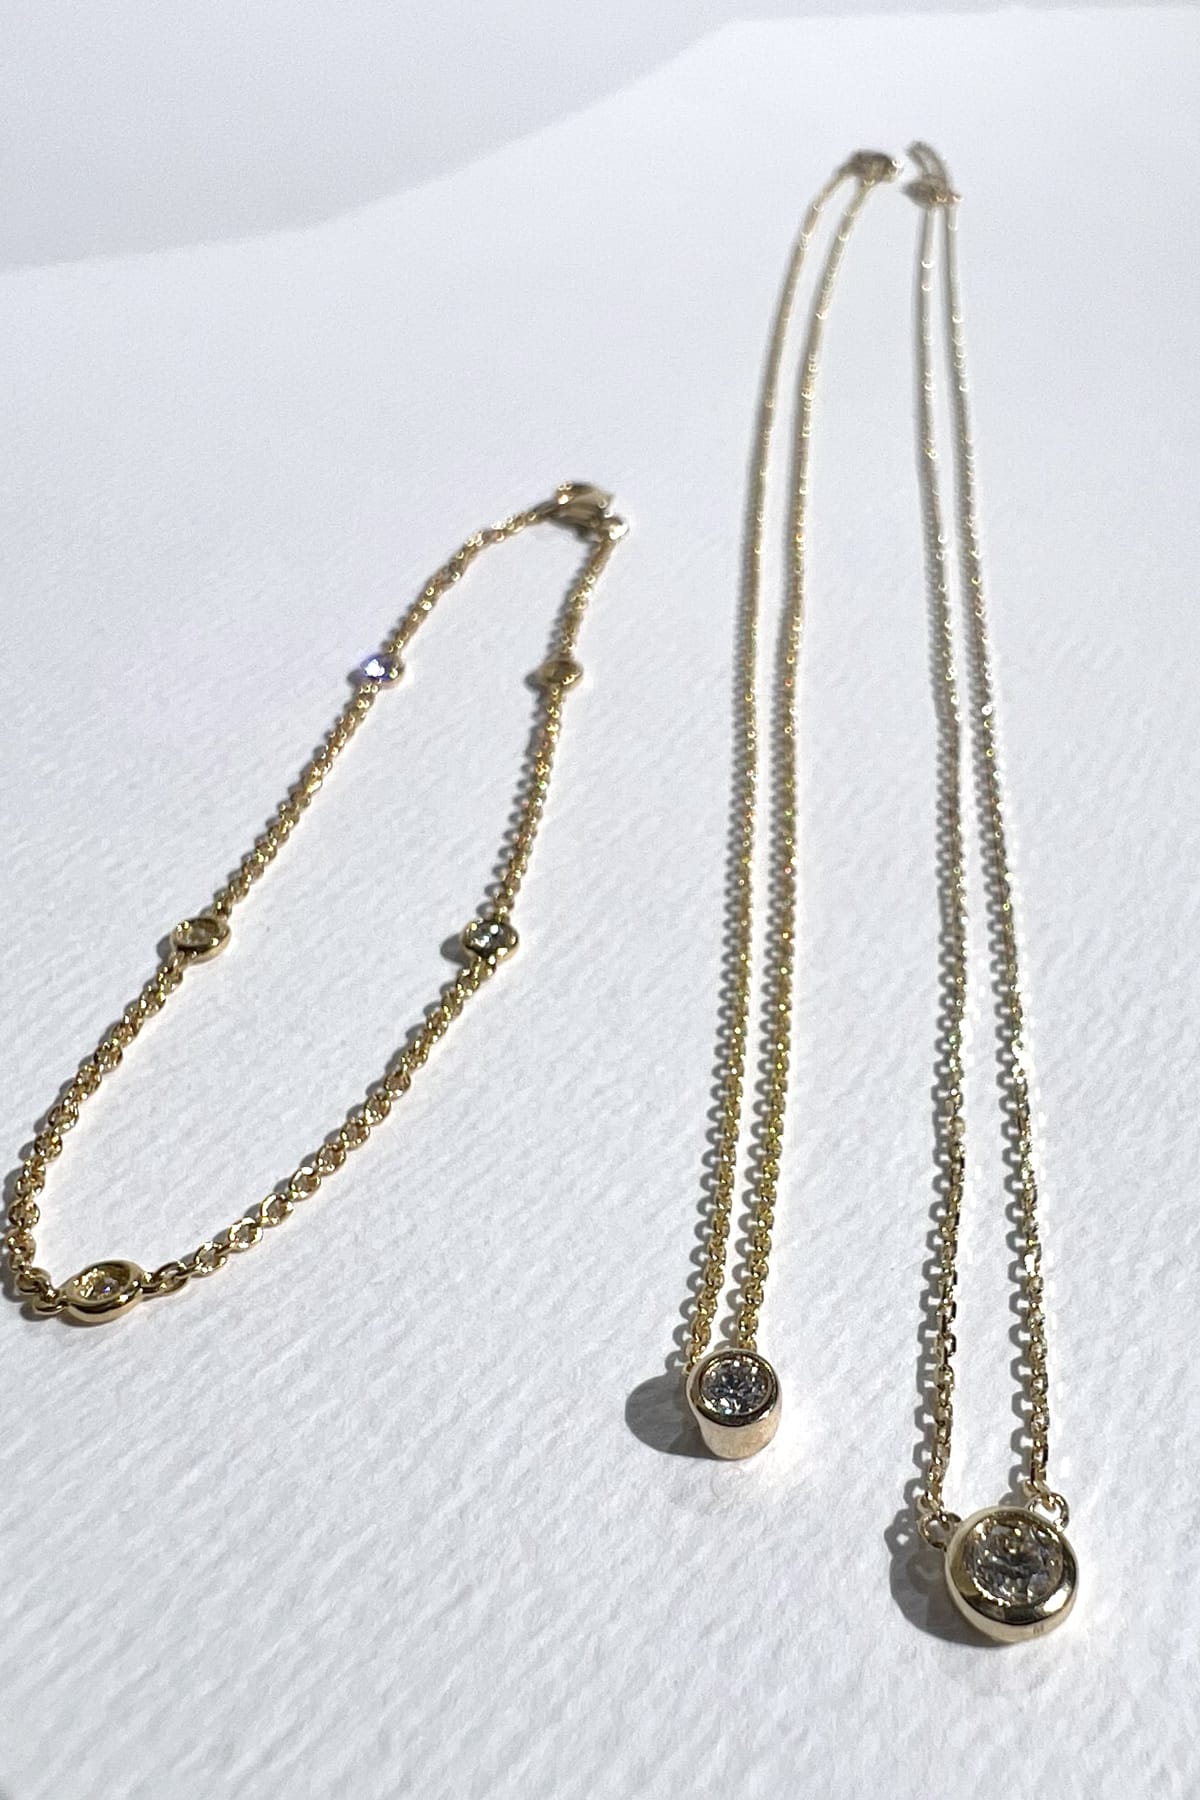 Gold diamond necklaces and bracelets at LeGassick Diamond & Jewellery Gold Coast.